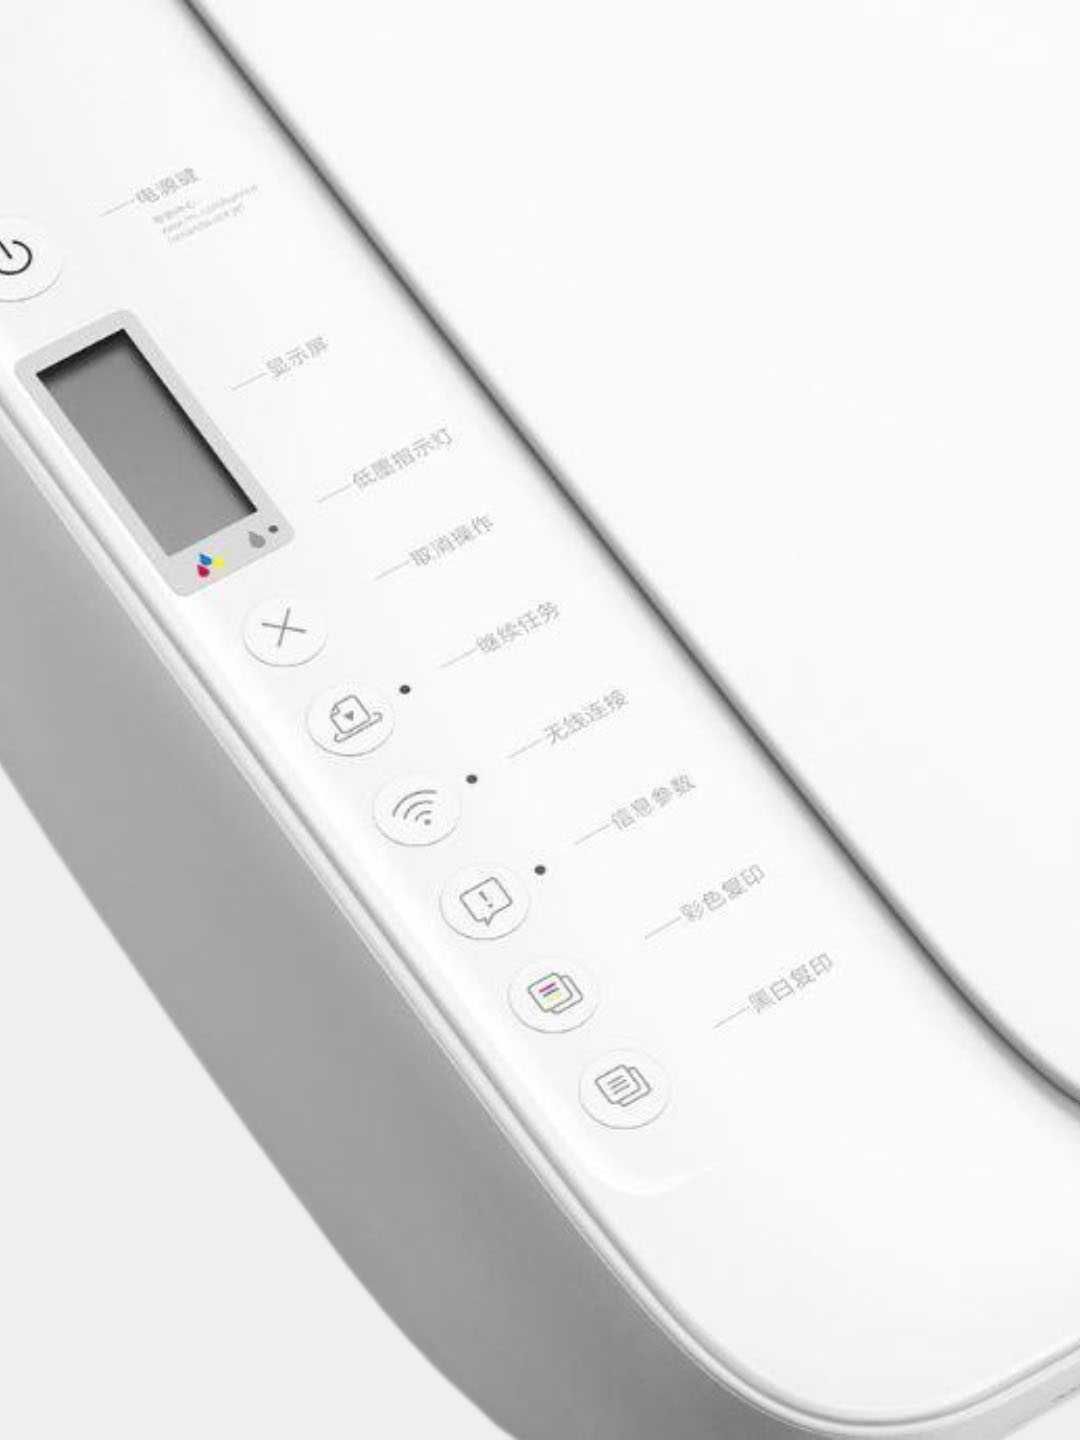 Беспроводной МФУ принтер Xiaomi Mi Inkjet All-in-One Wireless Printer